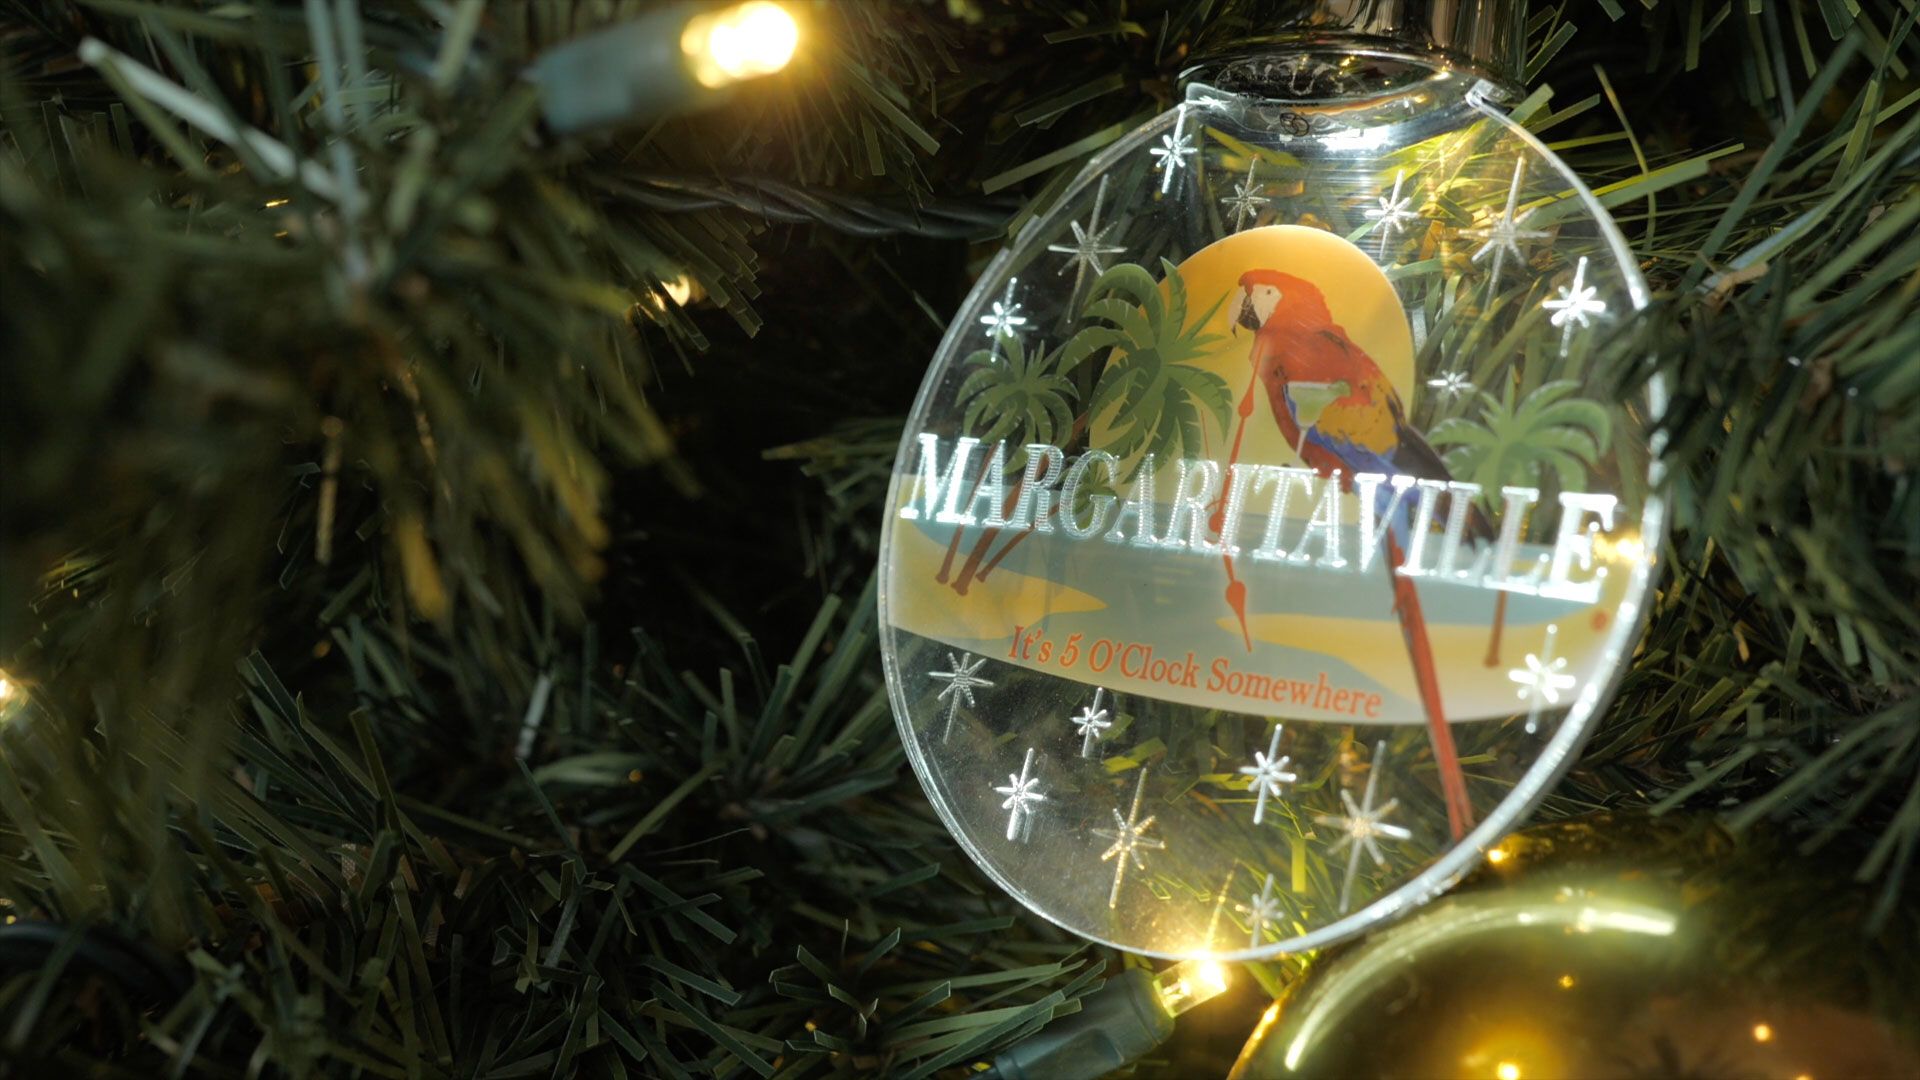 Margaritaville ornament on a lit Christmas tree.